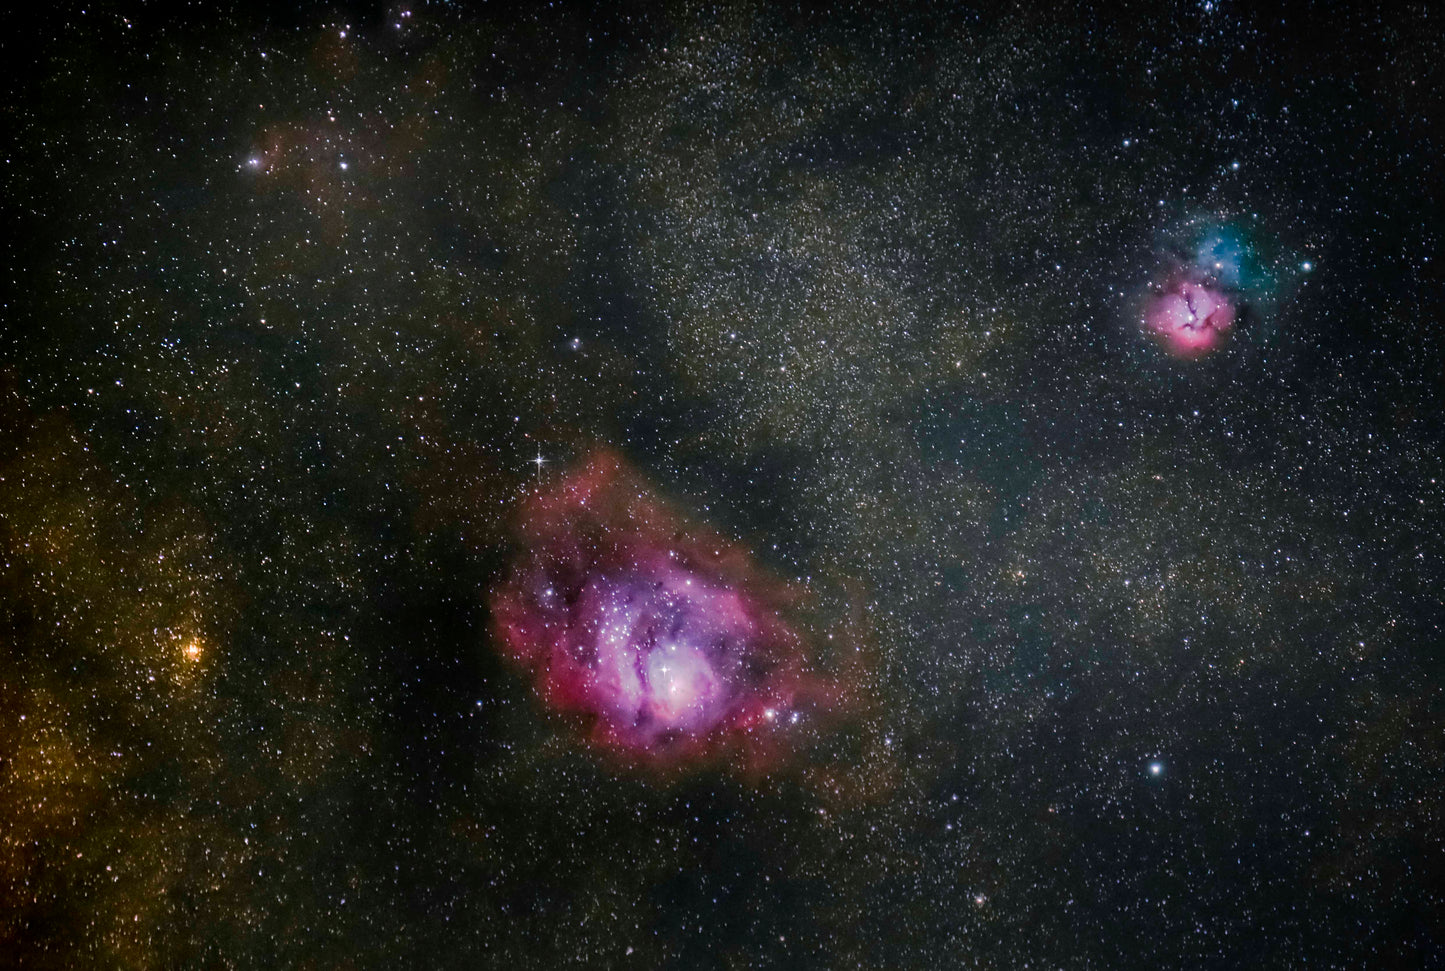 Deep Space, Lagoon and Triffid Nebula